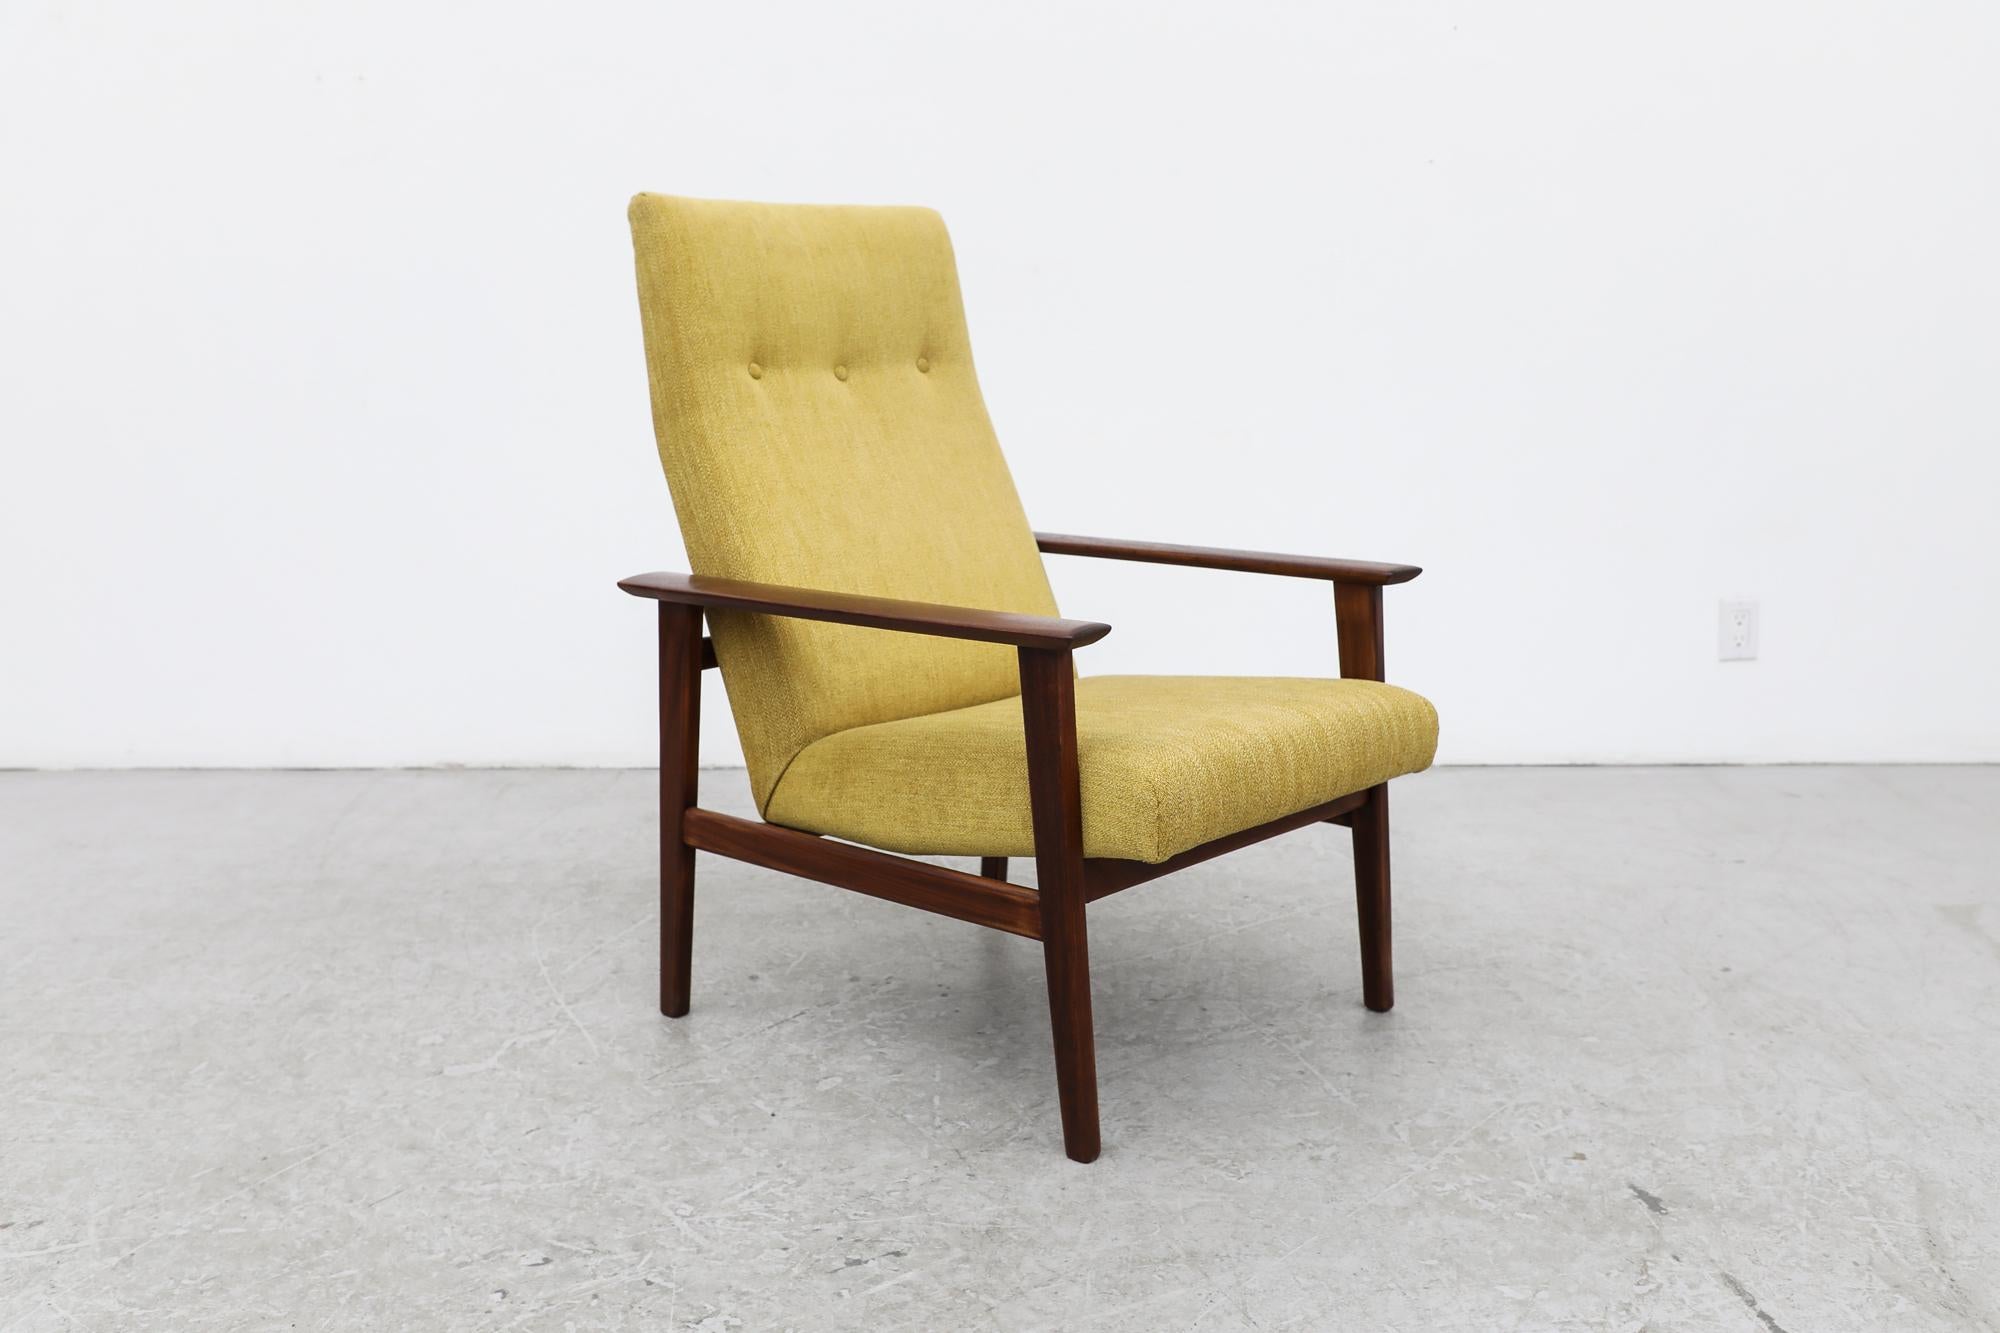 Handsome Hans Wegner Inspired Mid-Century Teak Lounge Chair in Saffron Fabric For Sale 1